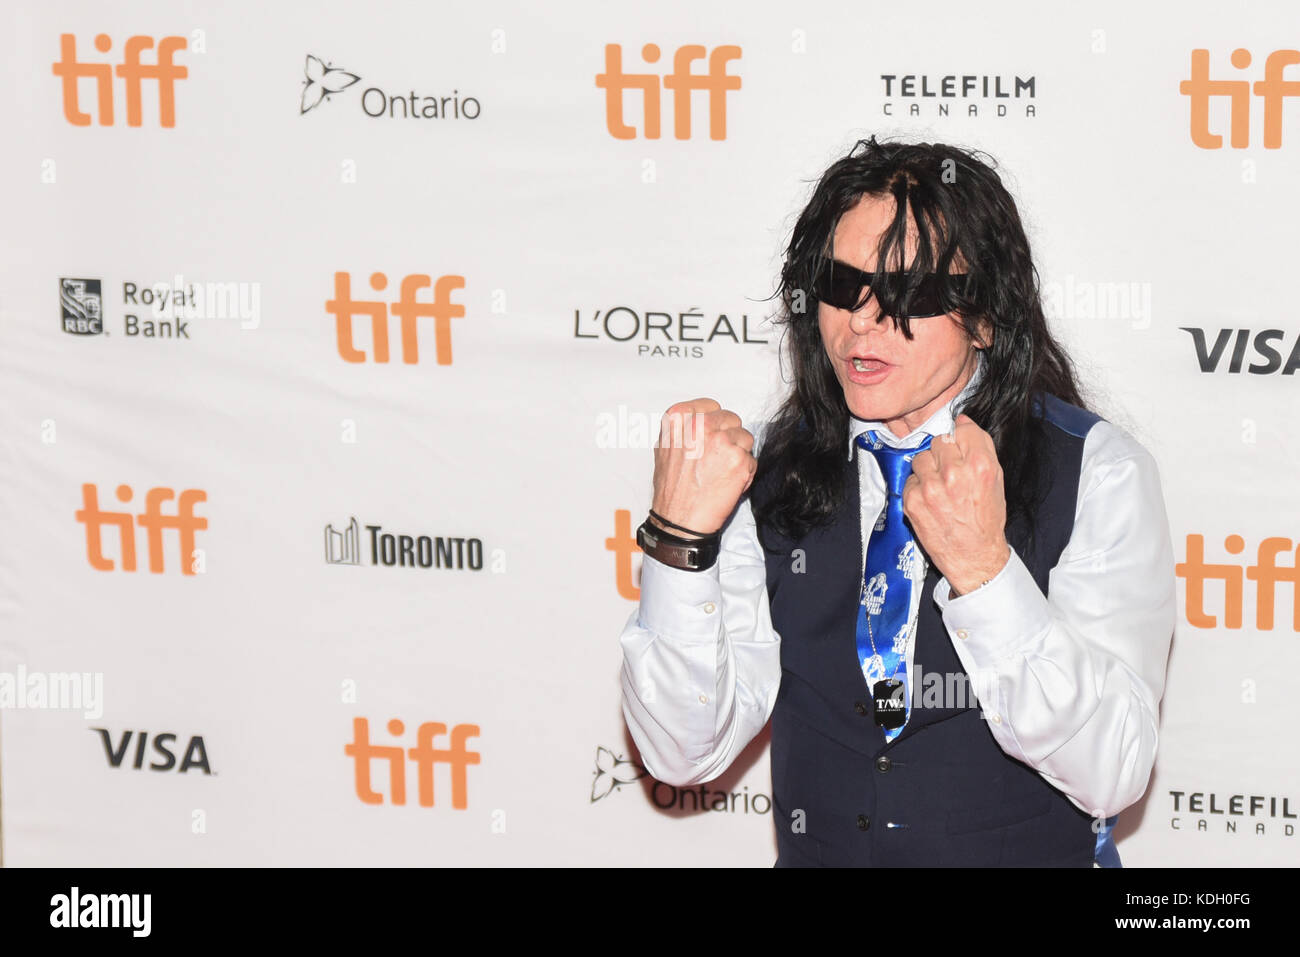 42 Toronto International Film Festival - "die Katastrophe artist"-Premiere mit: Tommy wiseau Wo: Toronto, Kanada, wenn: 11 Sep 2017 Credit: jaime Espinoza/wenn.com Stockfoto